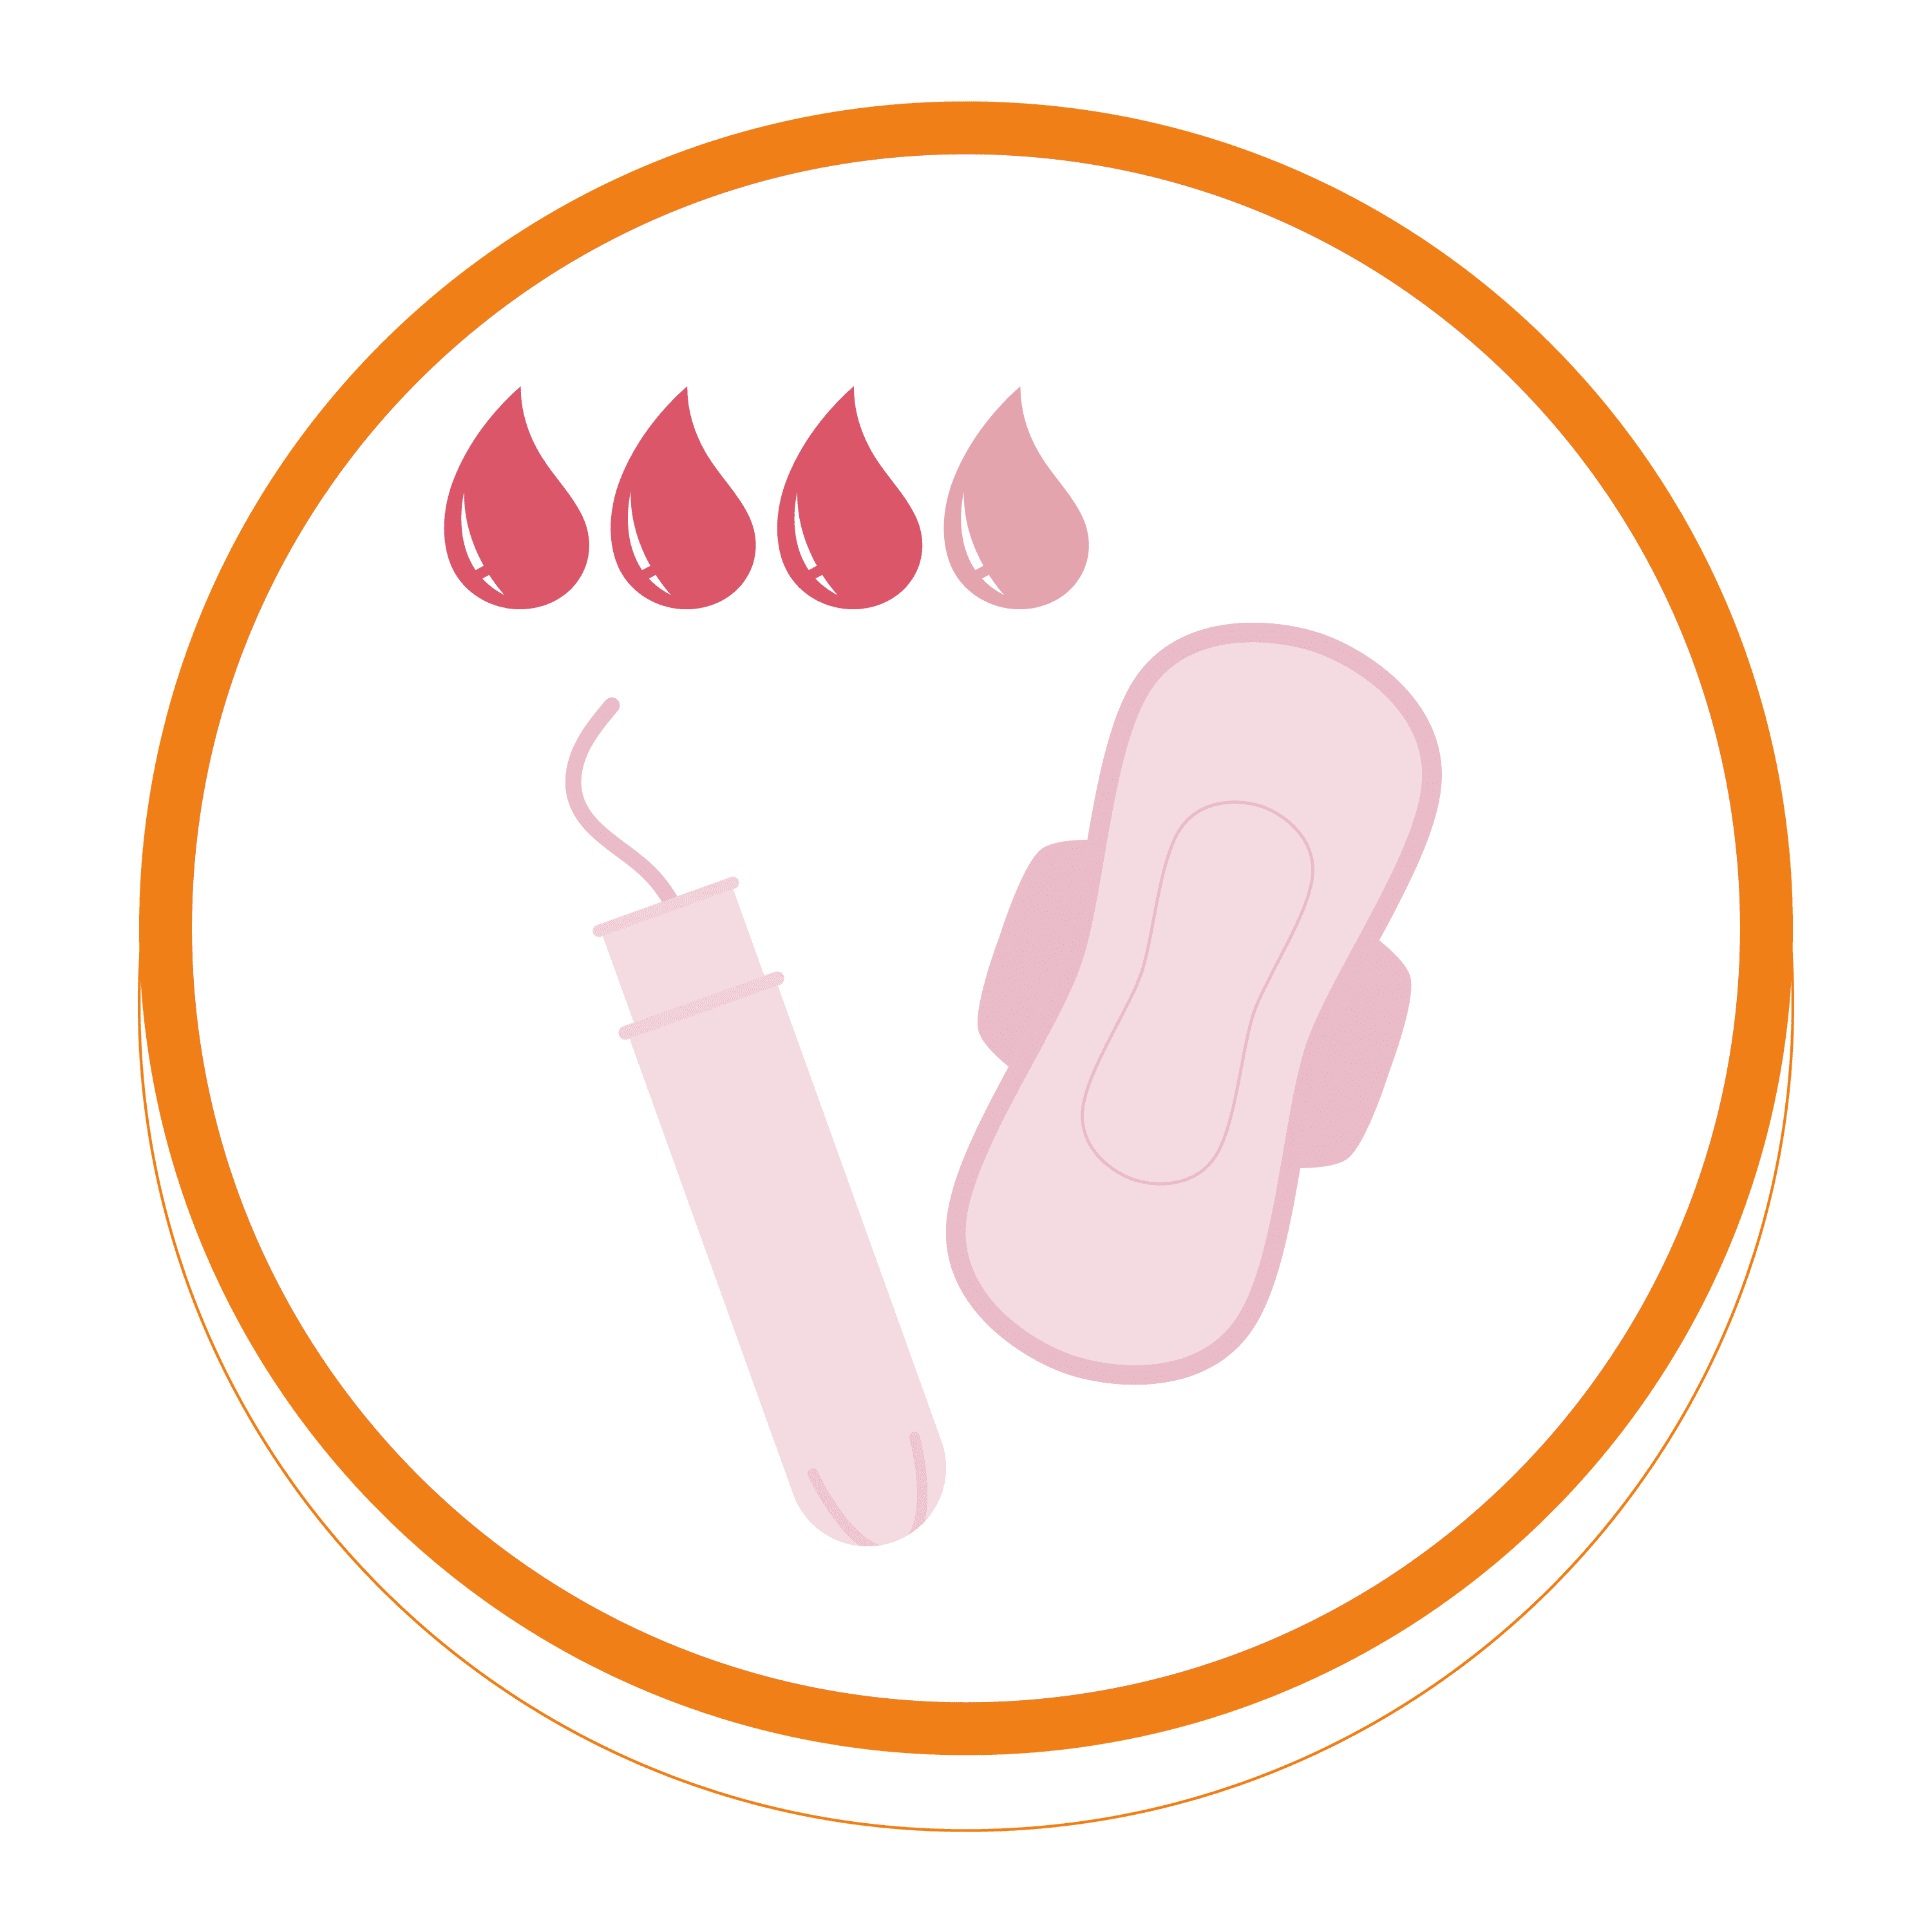 Women during premenstrual, postpartum, and postmenopausal periods